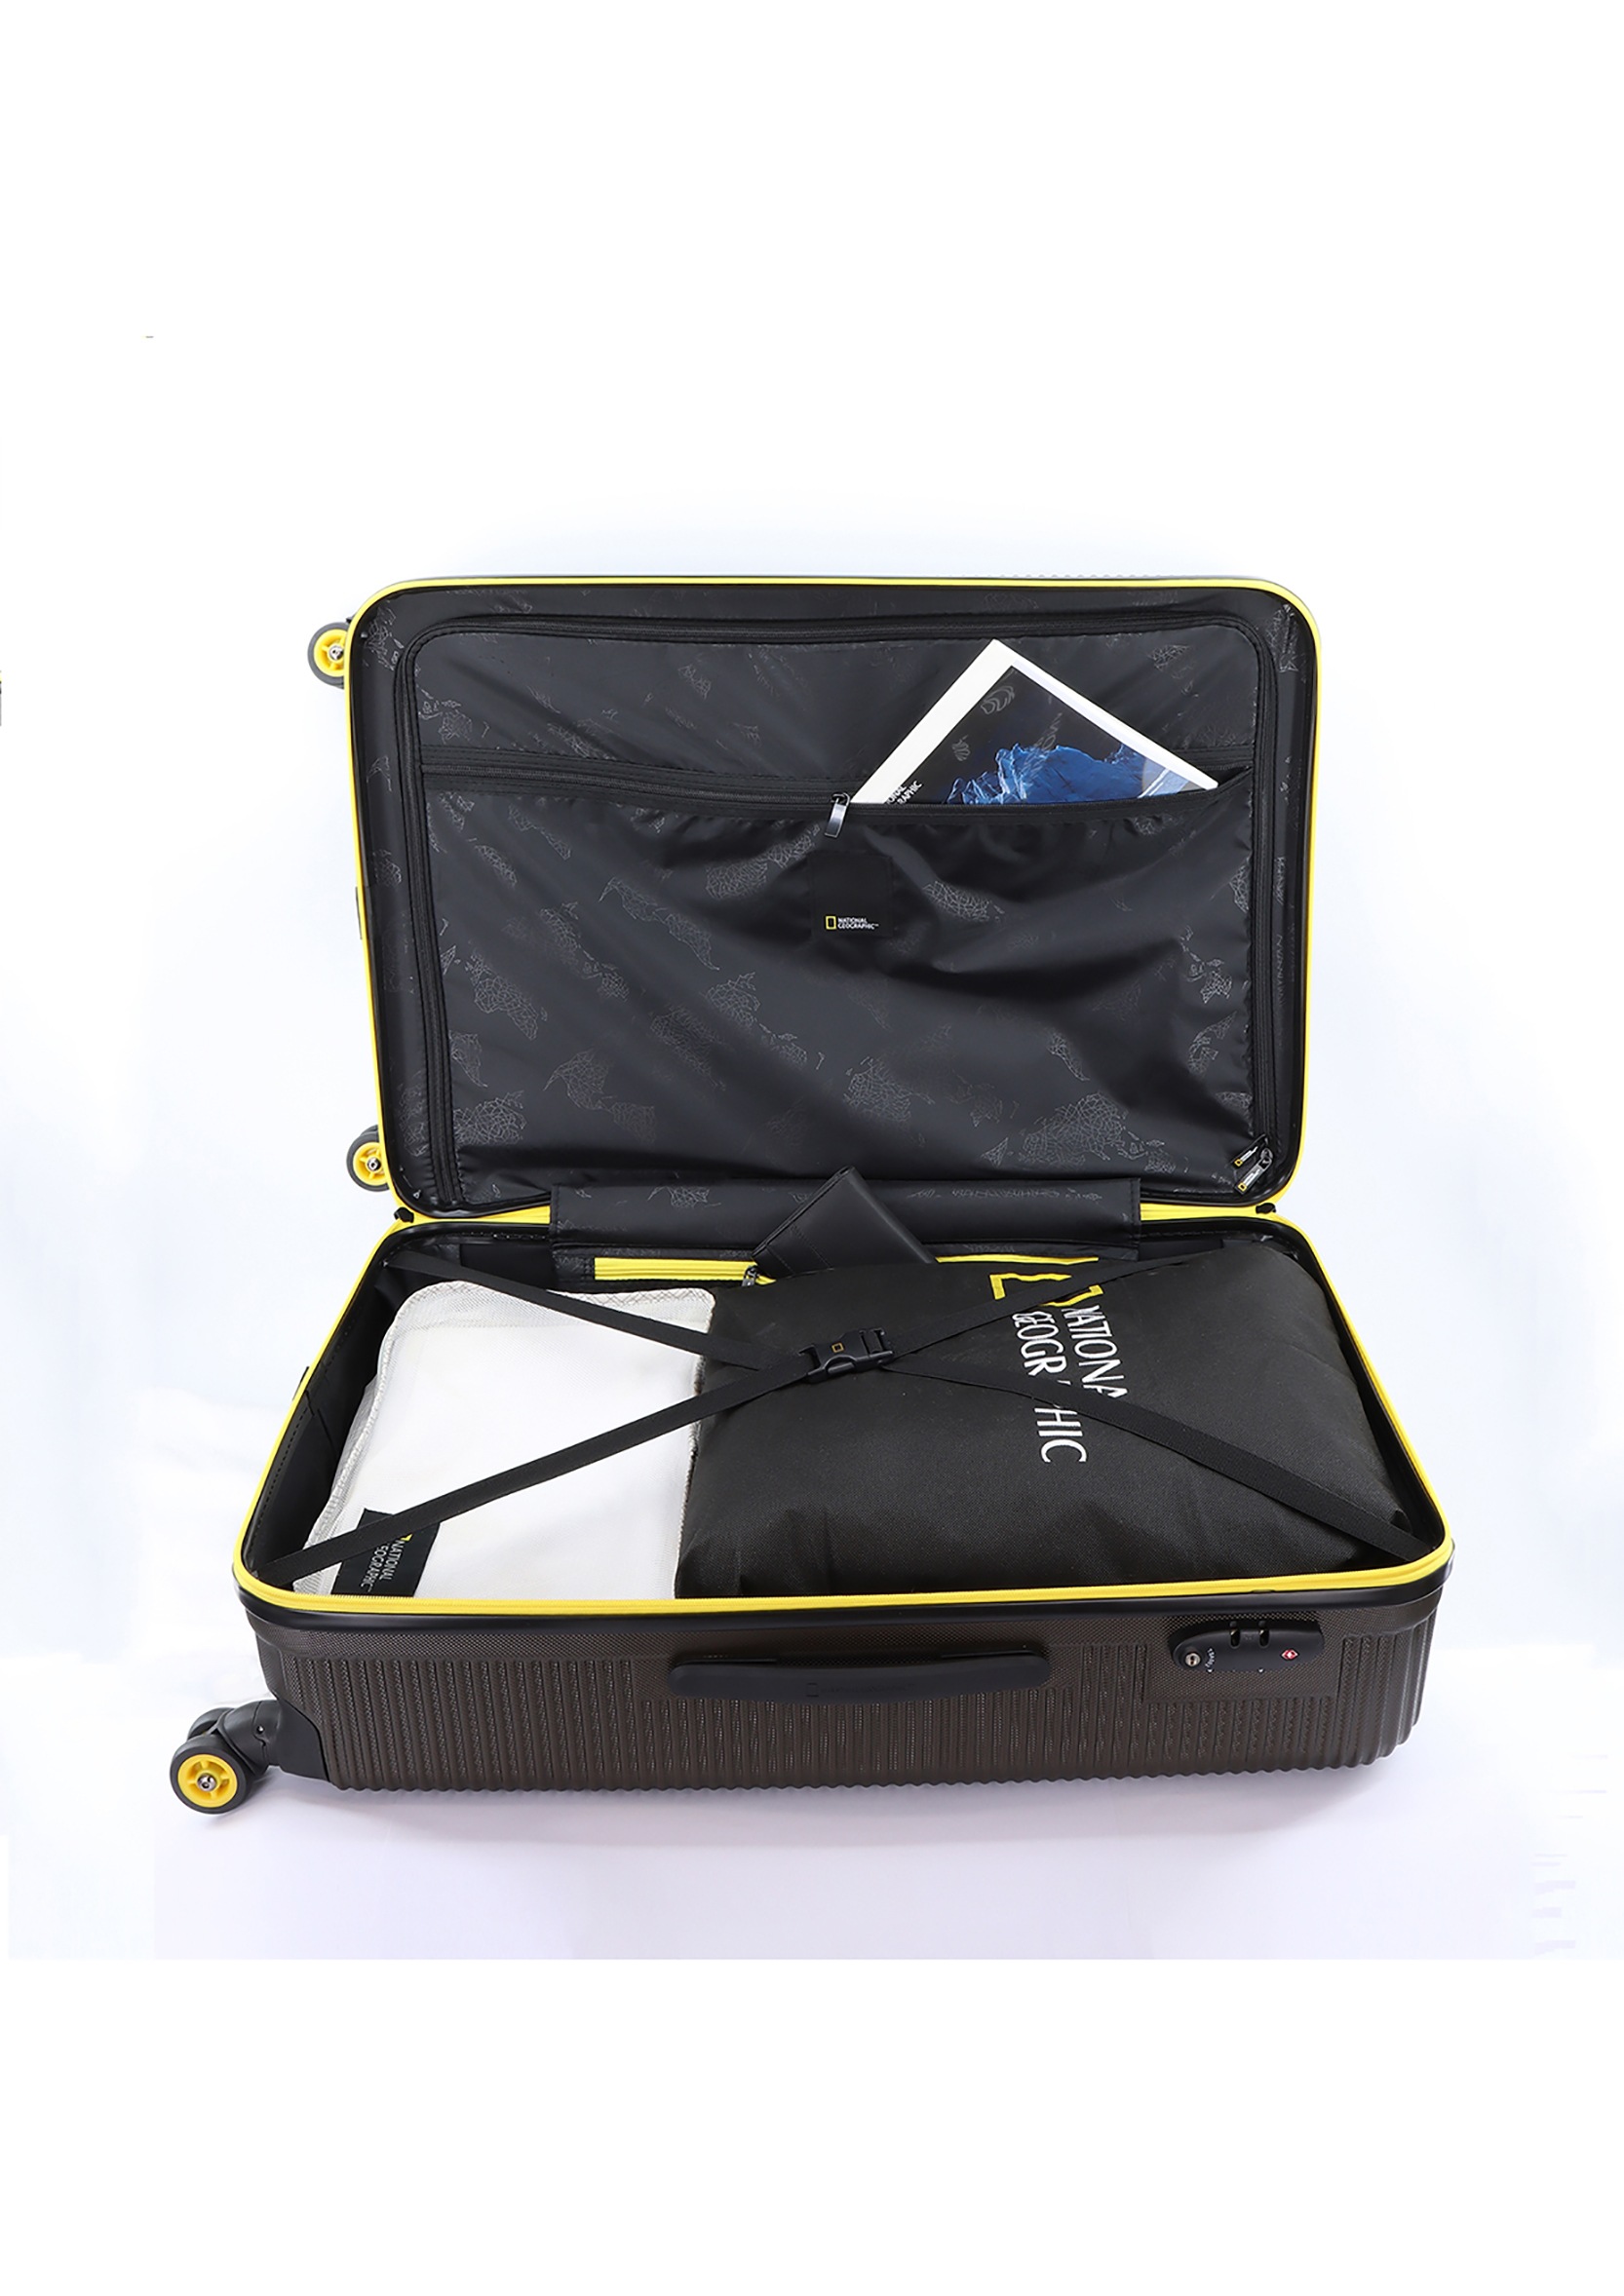 NATIONAL GEOGRAPHIC Koffer »Abroad«, mit integriertem TSA-Zahlenschloss